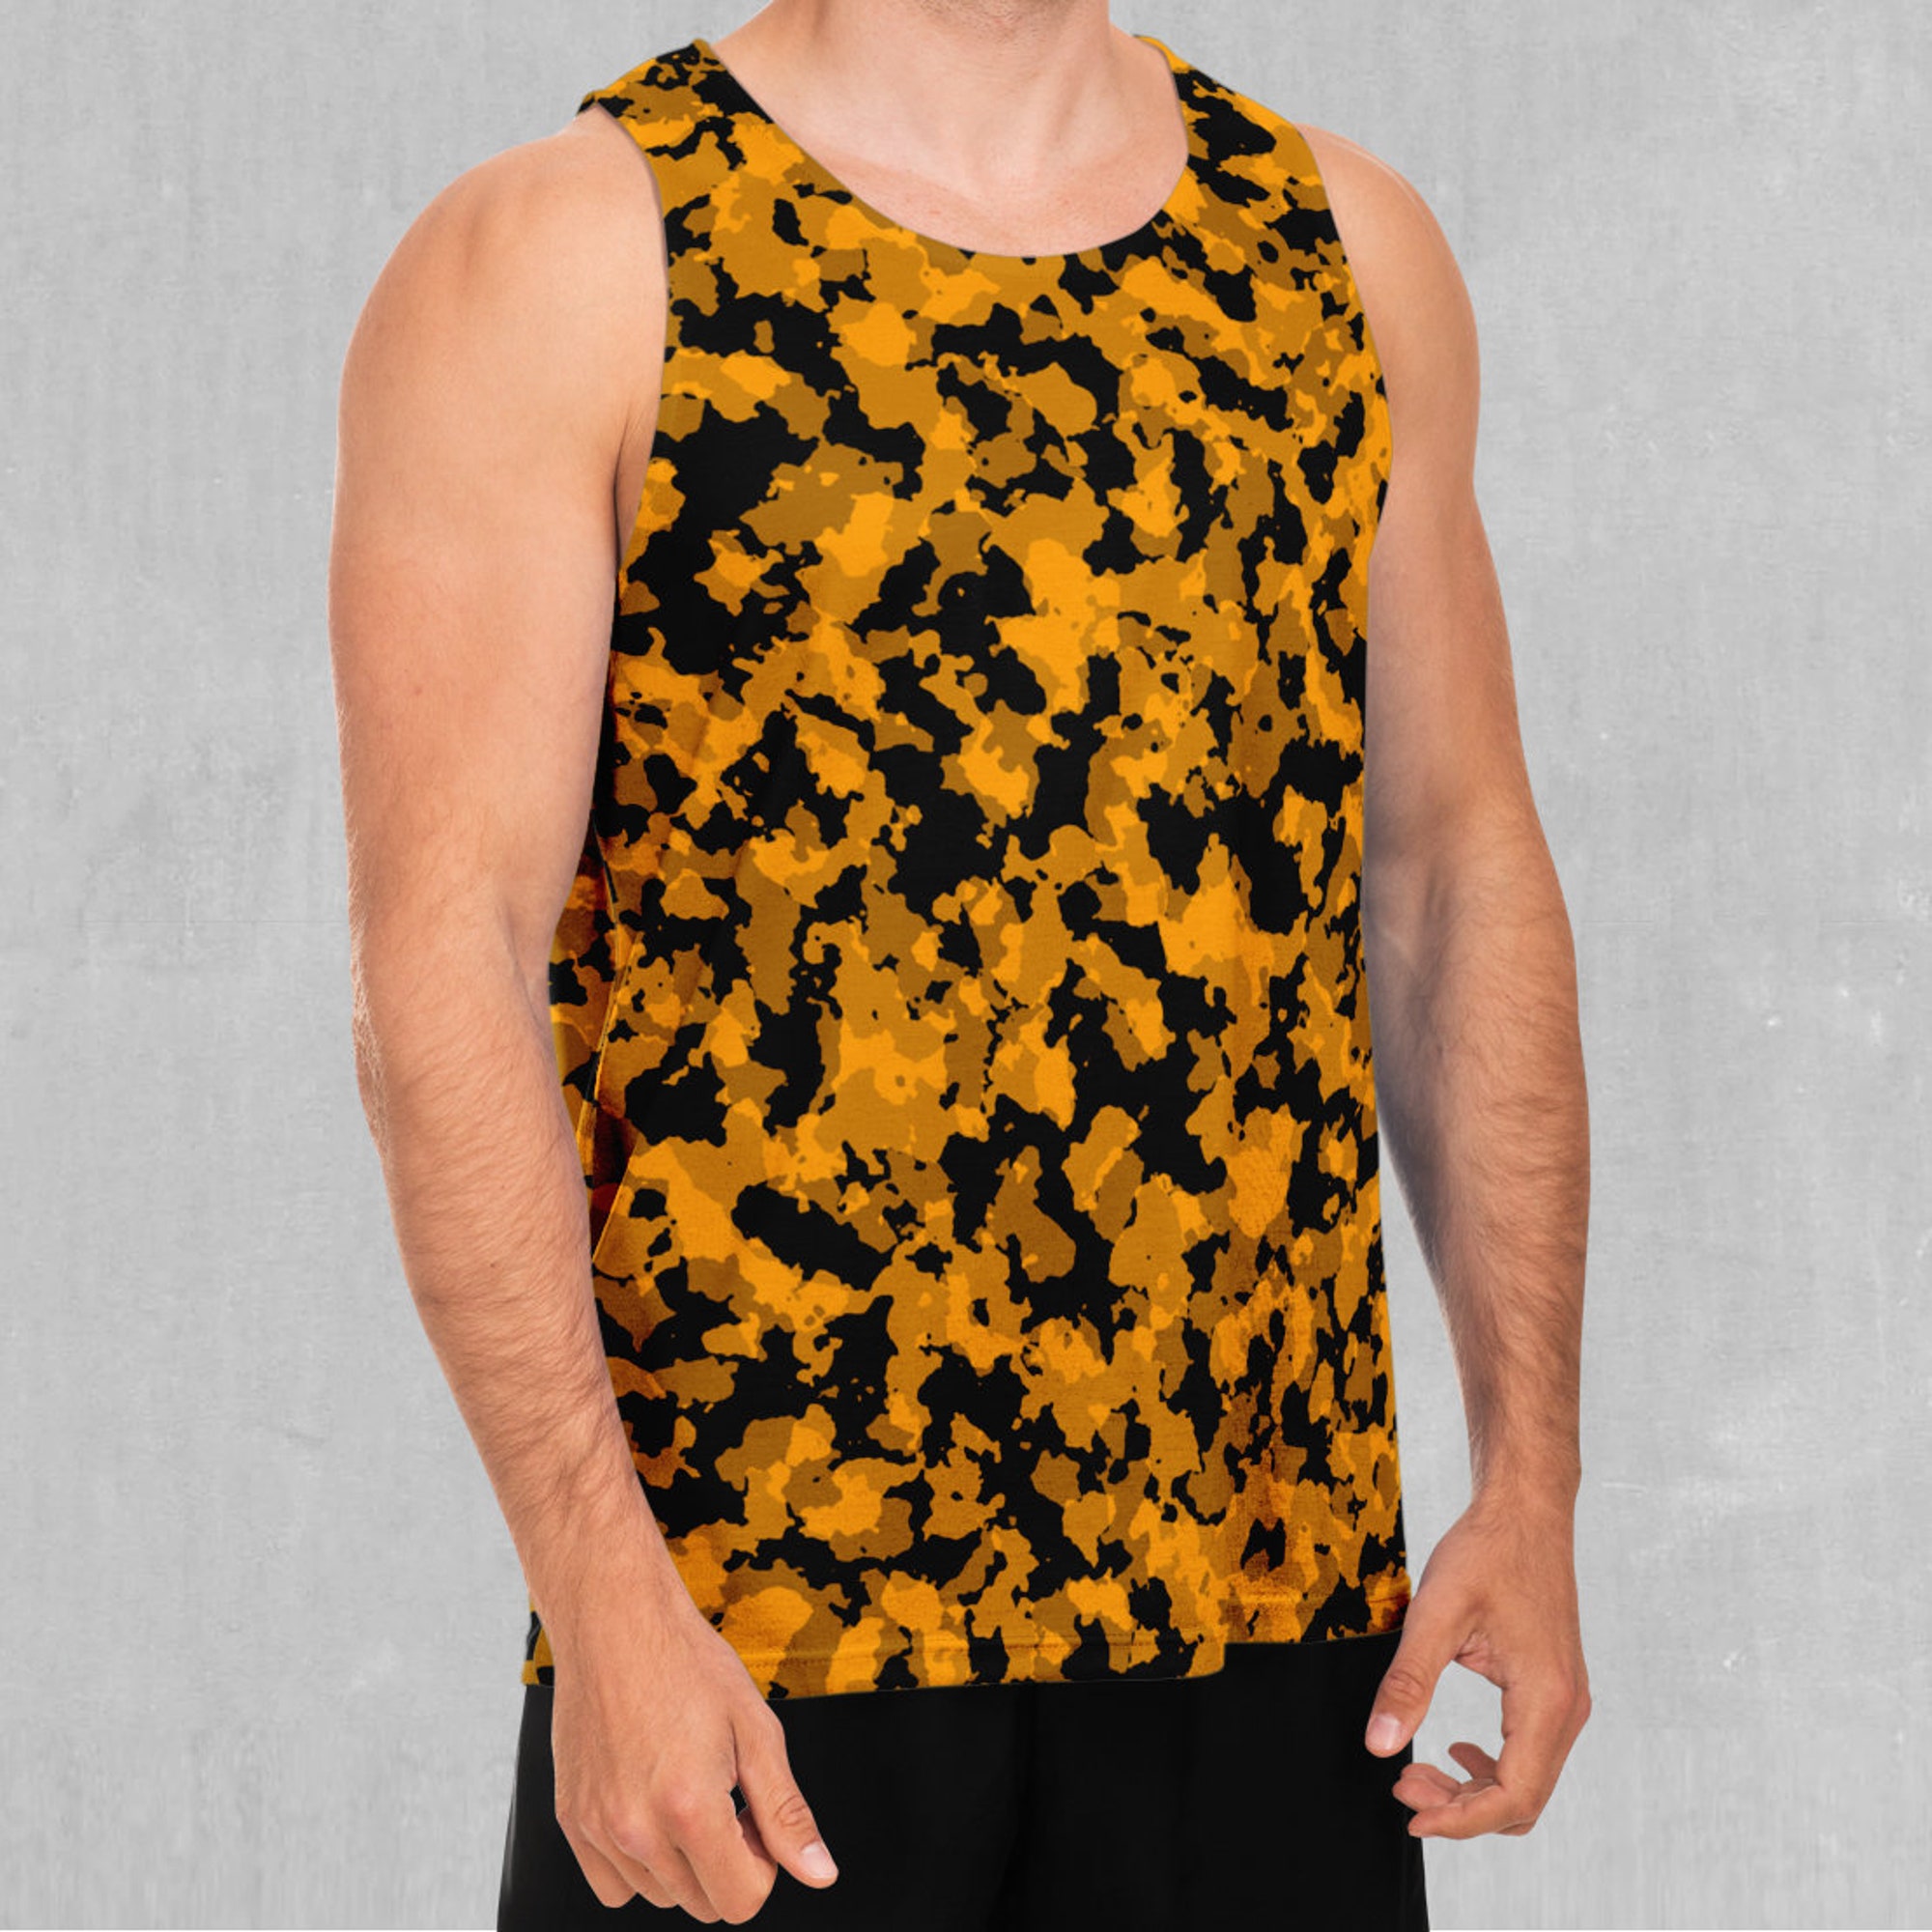 Stinger Yellow Camo Men's Tank Top Muscle Sleeveless Shirt